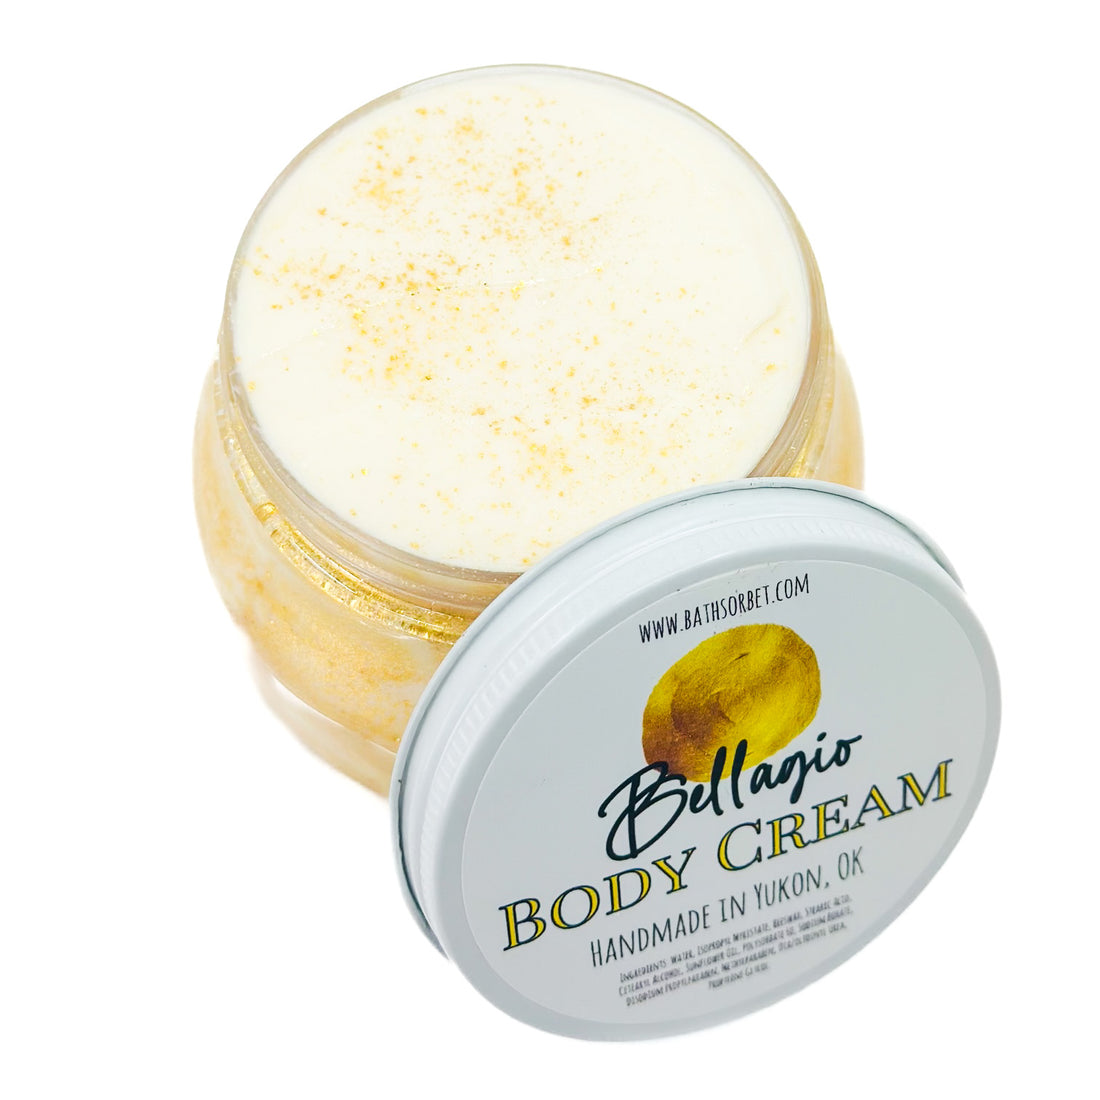 Bellagio Body Cream